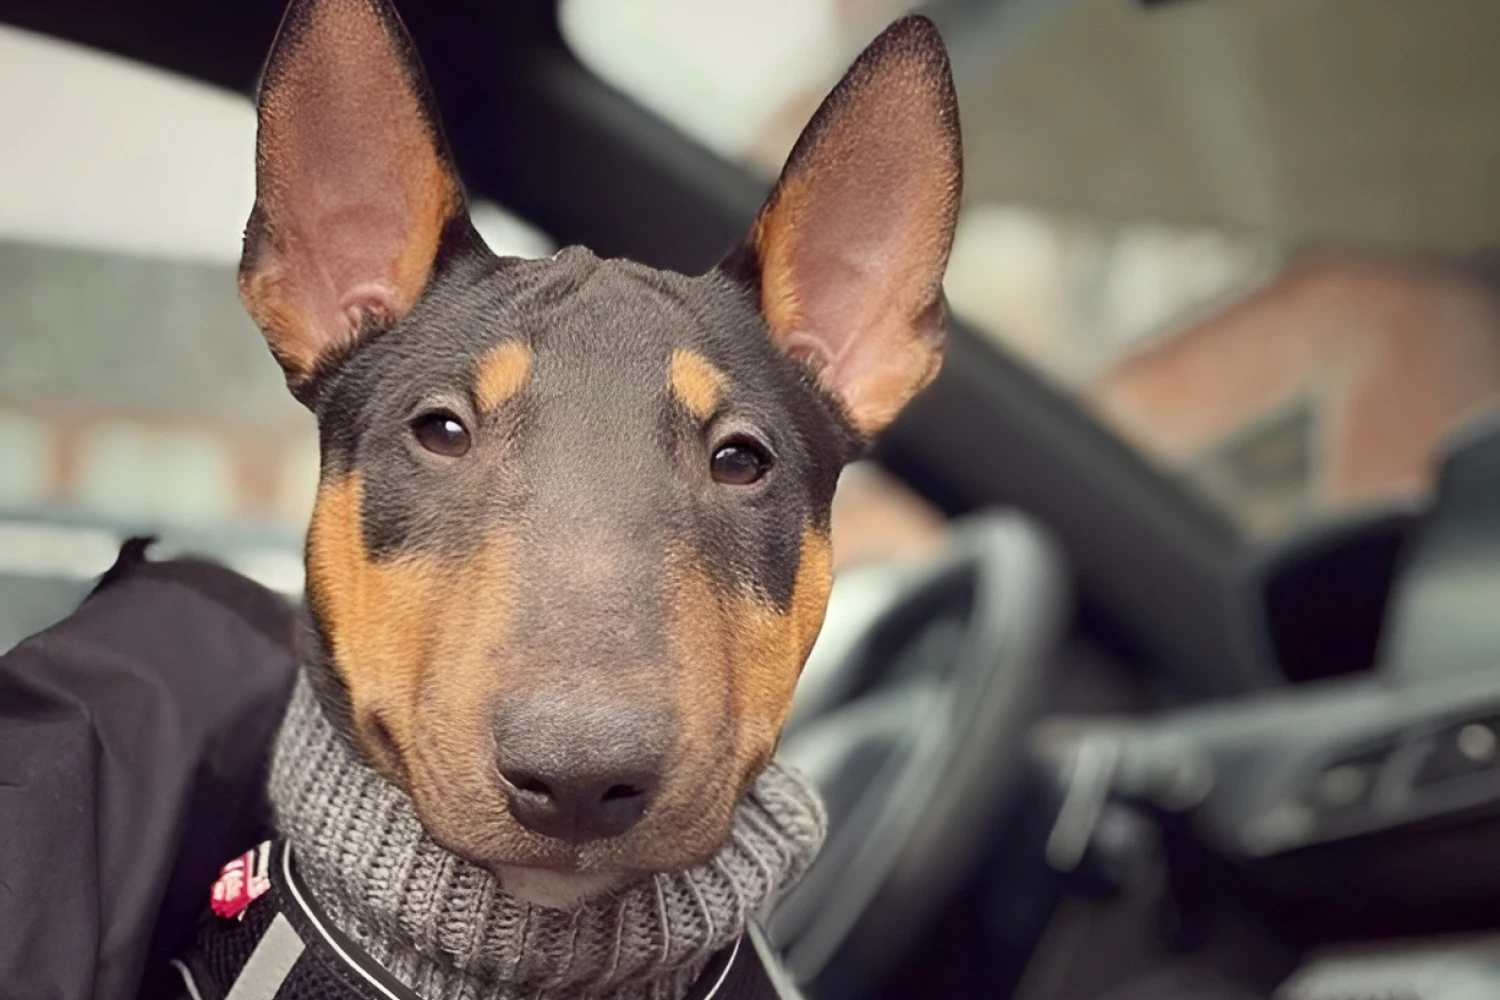 Honda Accord Dog Car Seat for Miniature Bull Terriers